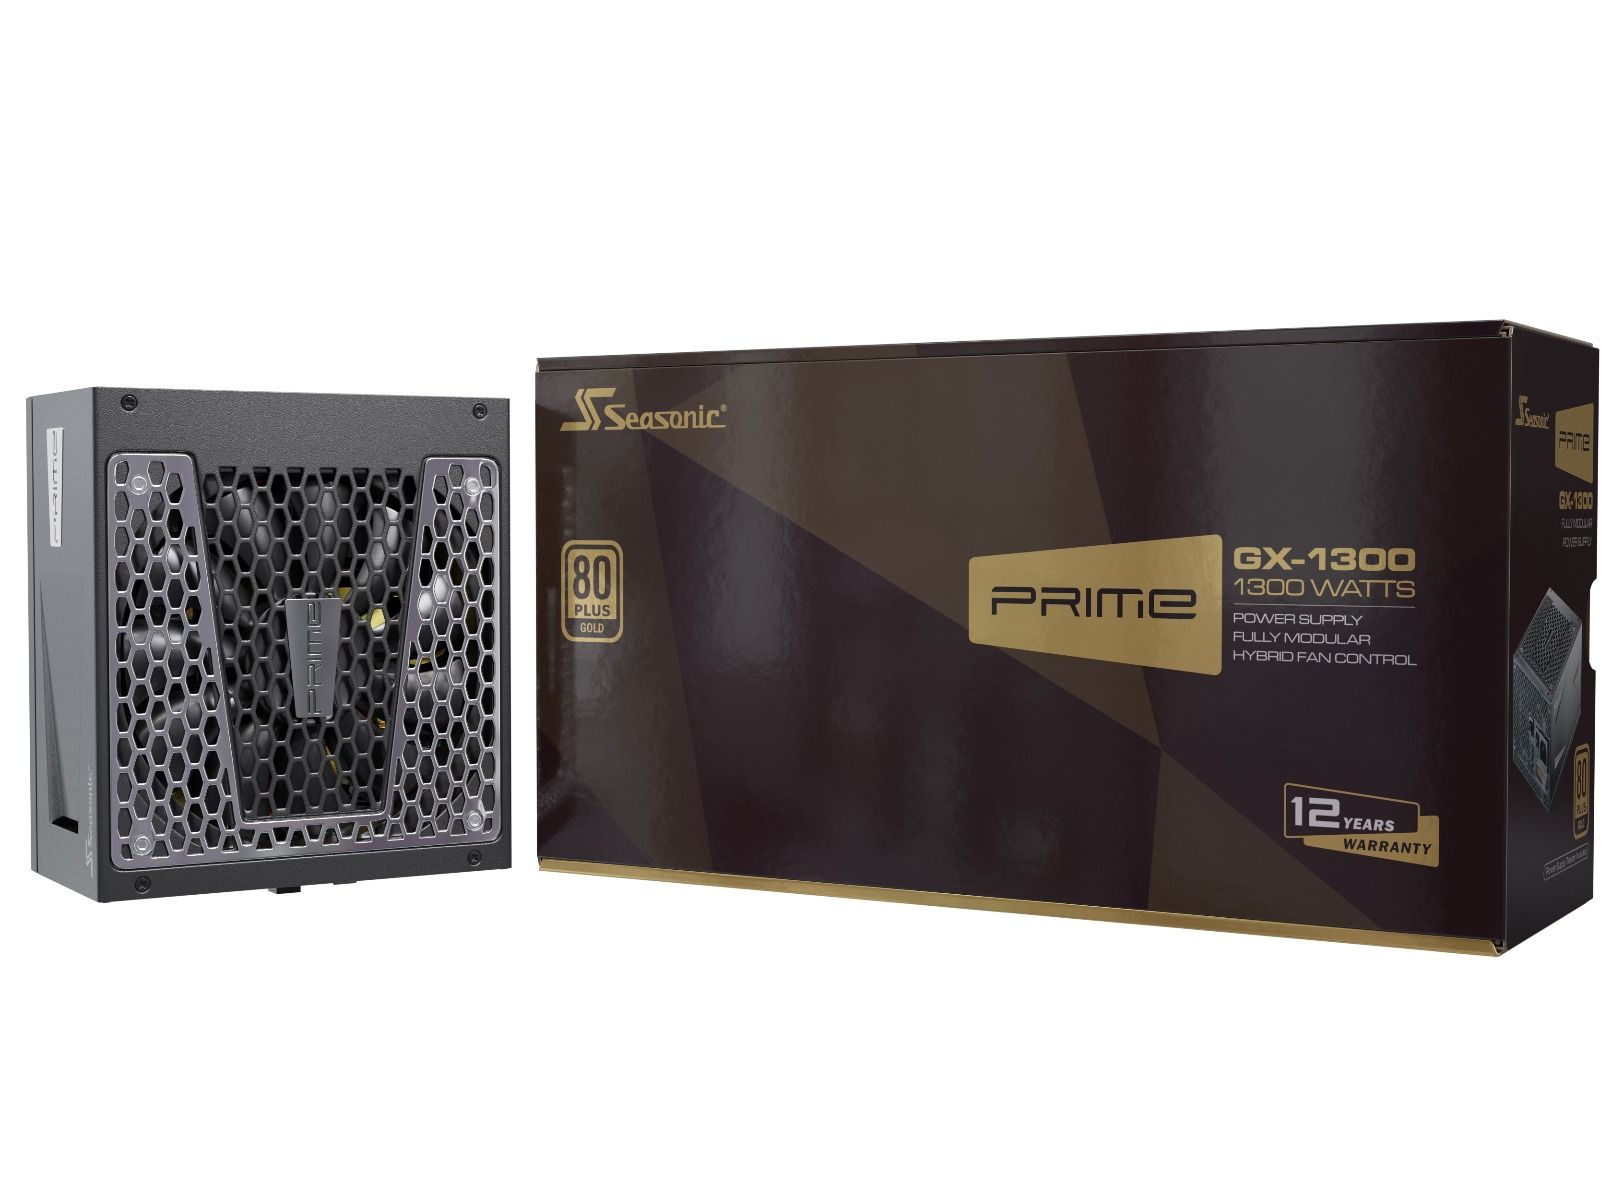 Seasonic Prime GX-1300 1300W 80 Plus Gold Power Supply